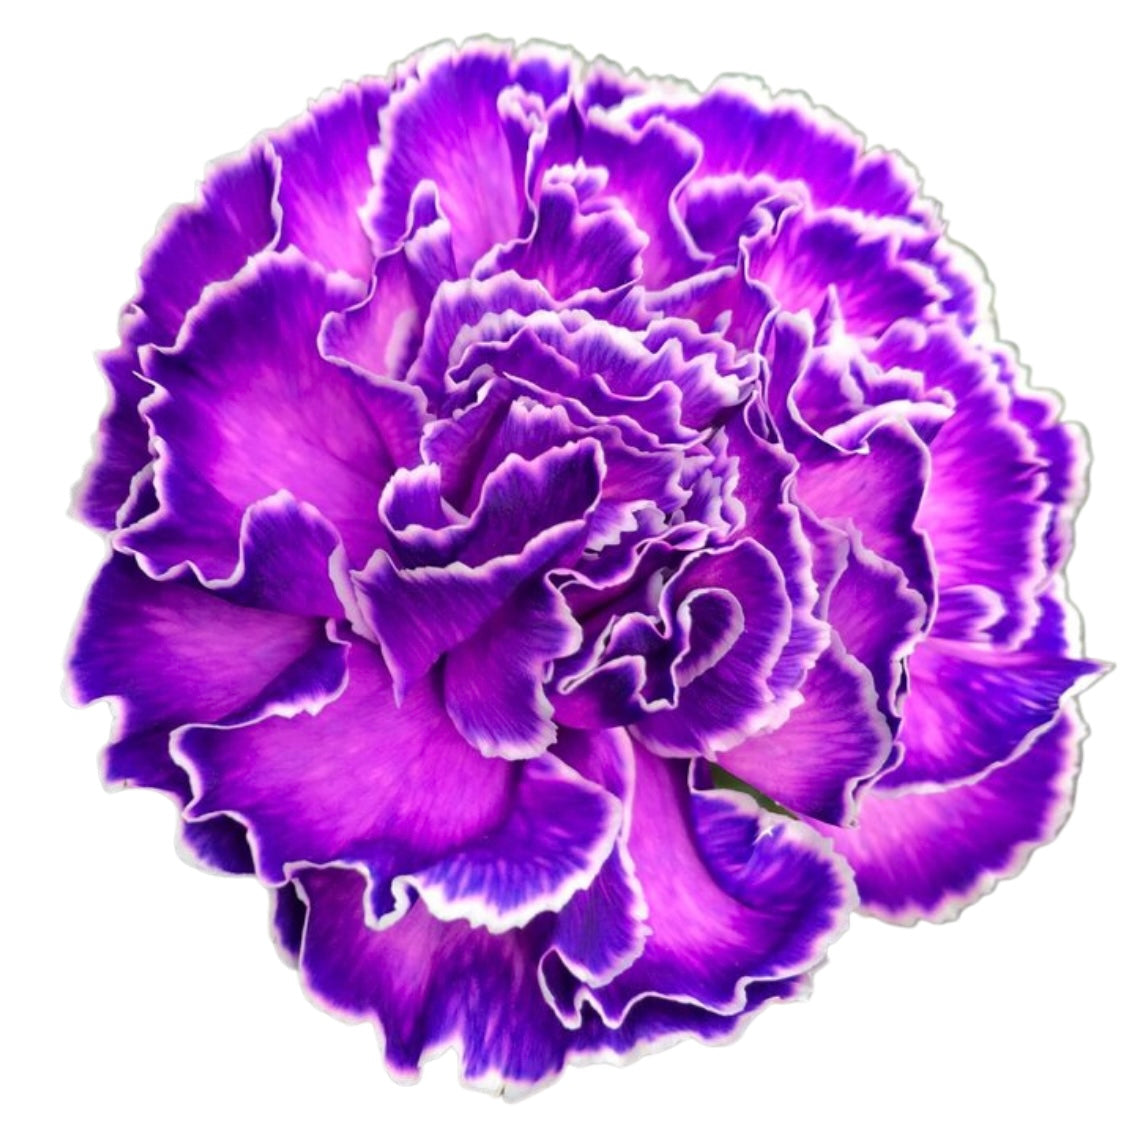 BioDye Flower Dye | 50g Biodegradable Stem Absorbed Flower Dye